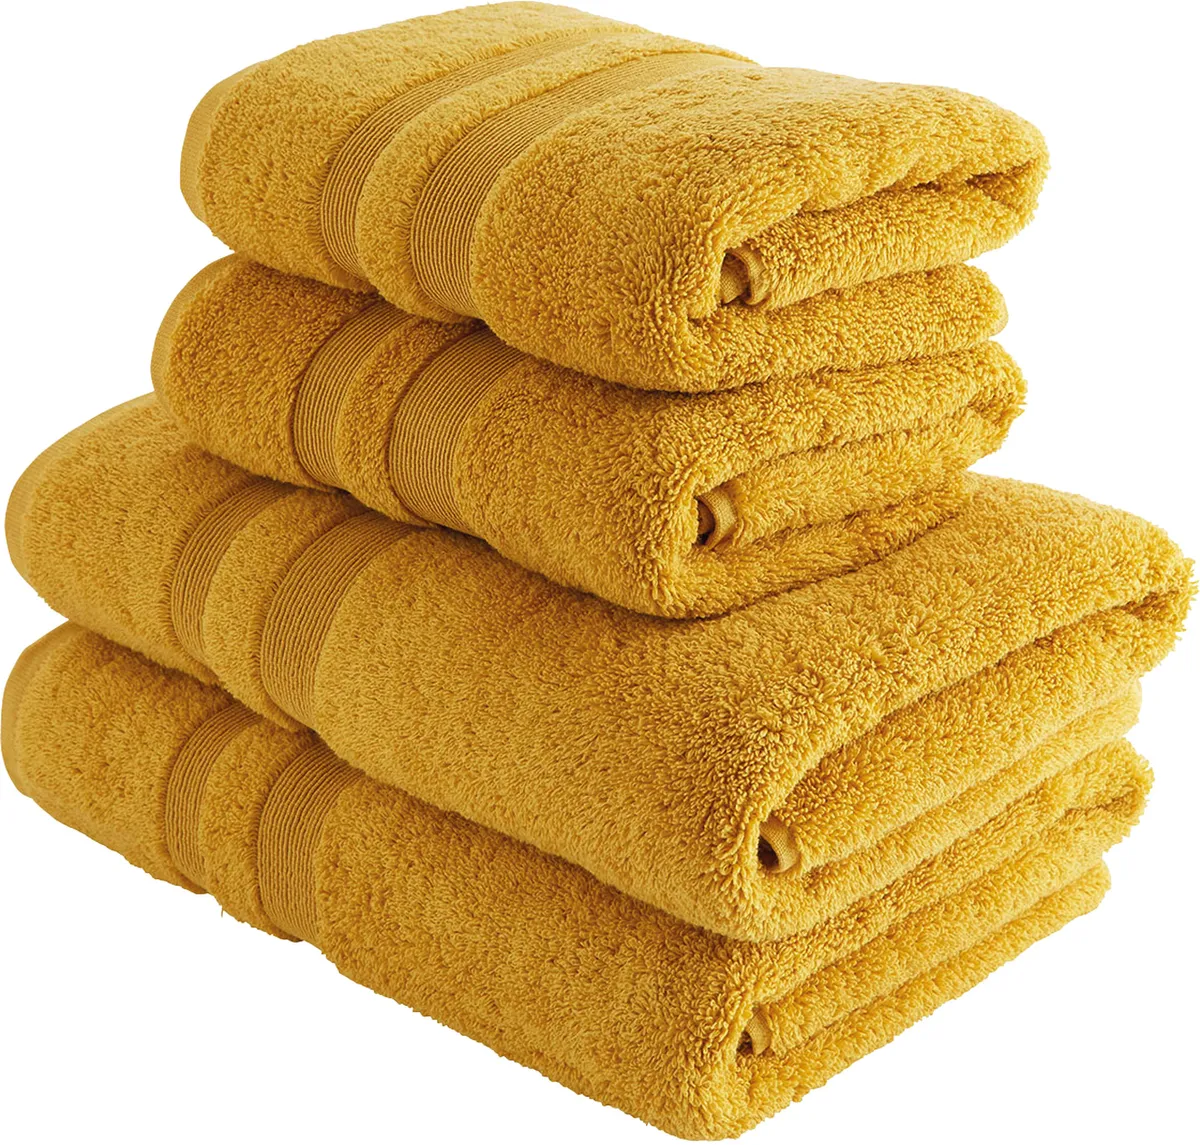 Spa cotton bath towel in Mustard, £17.60, Habitat